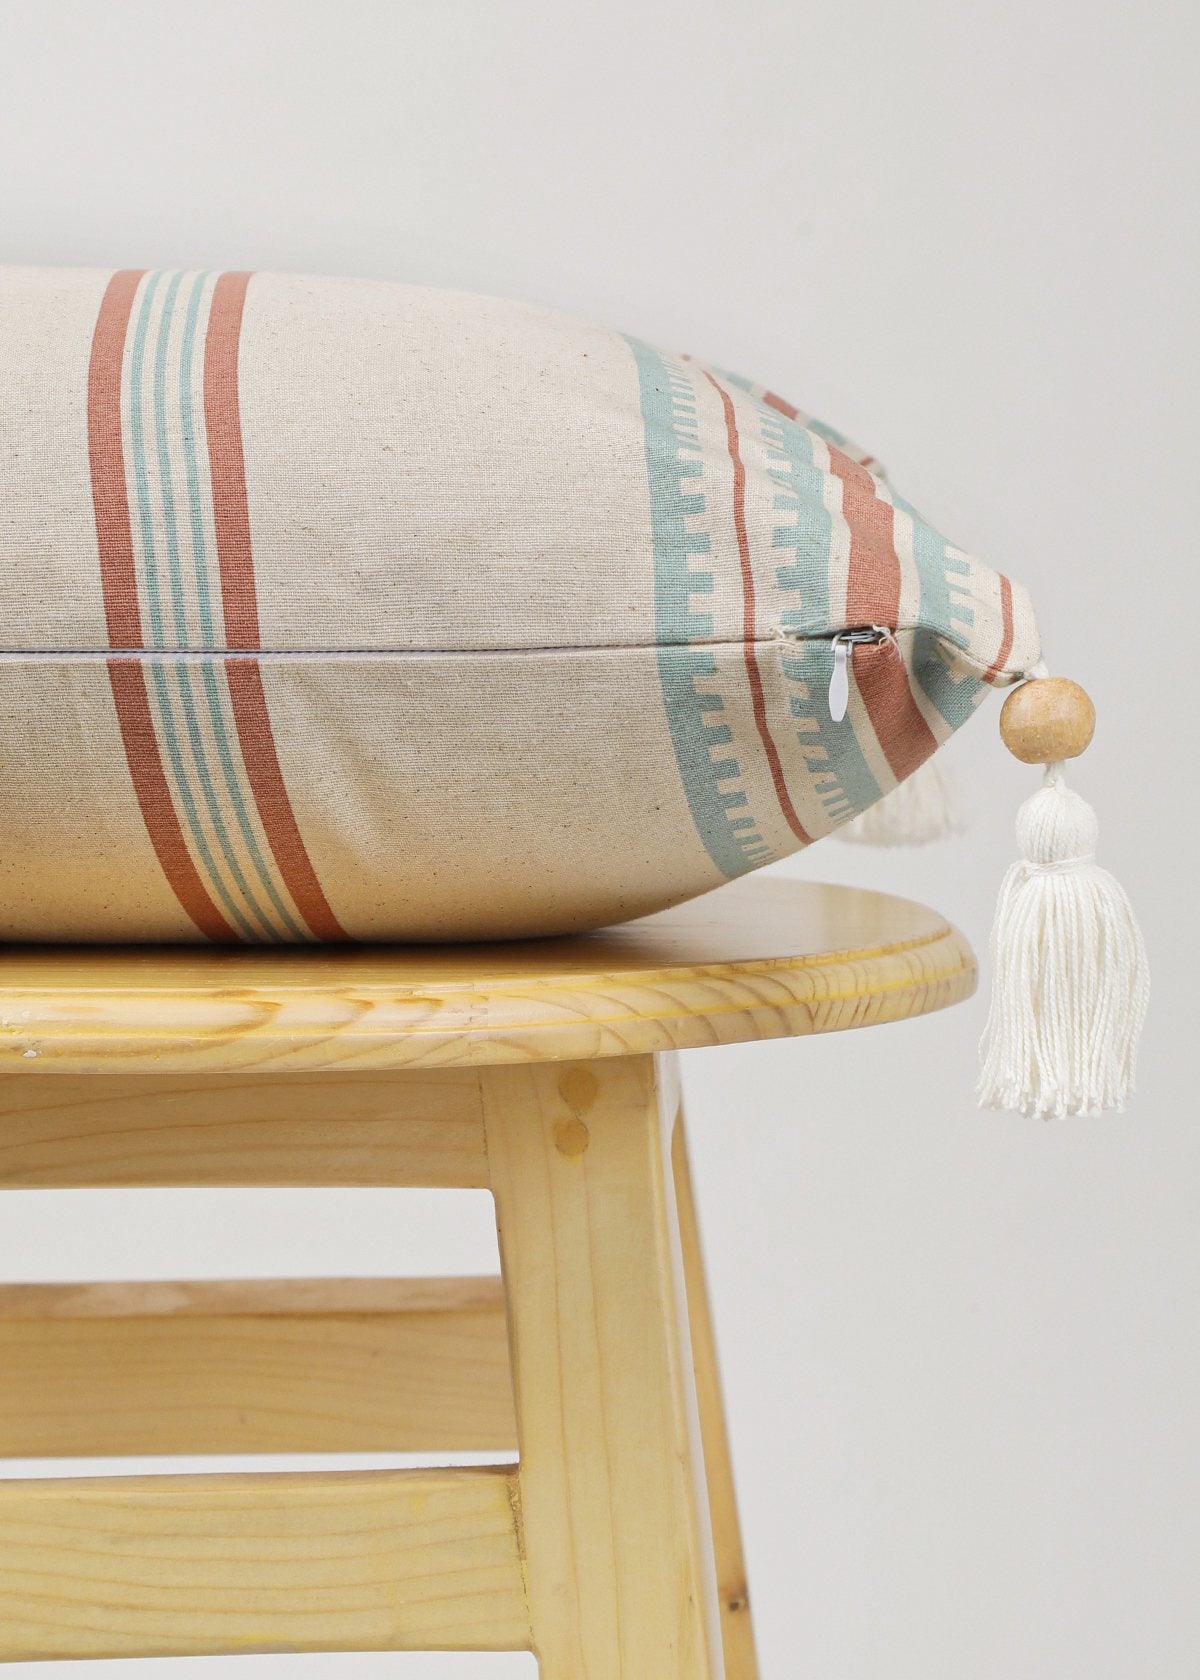 Roman stripes 100% cotton customisable geometric cushion cover for sofa - Rust and Nile blue